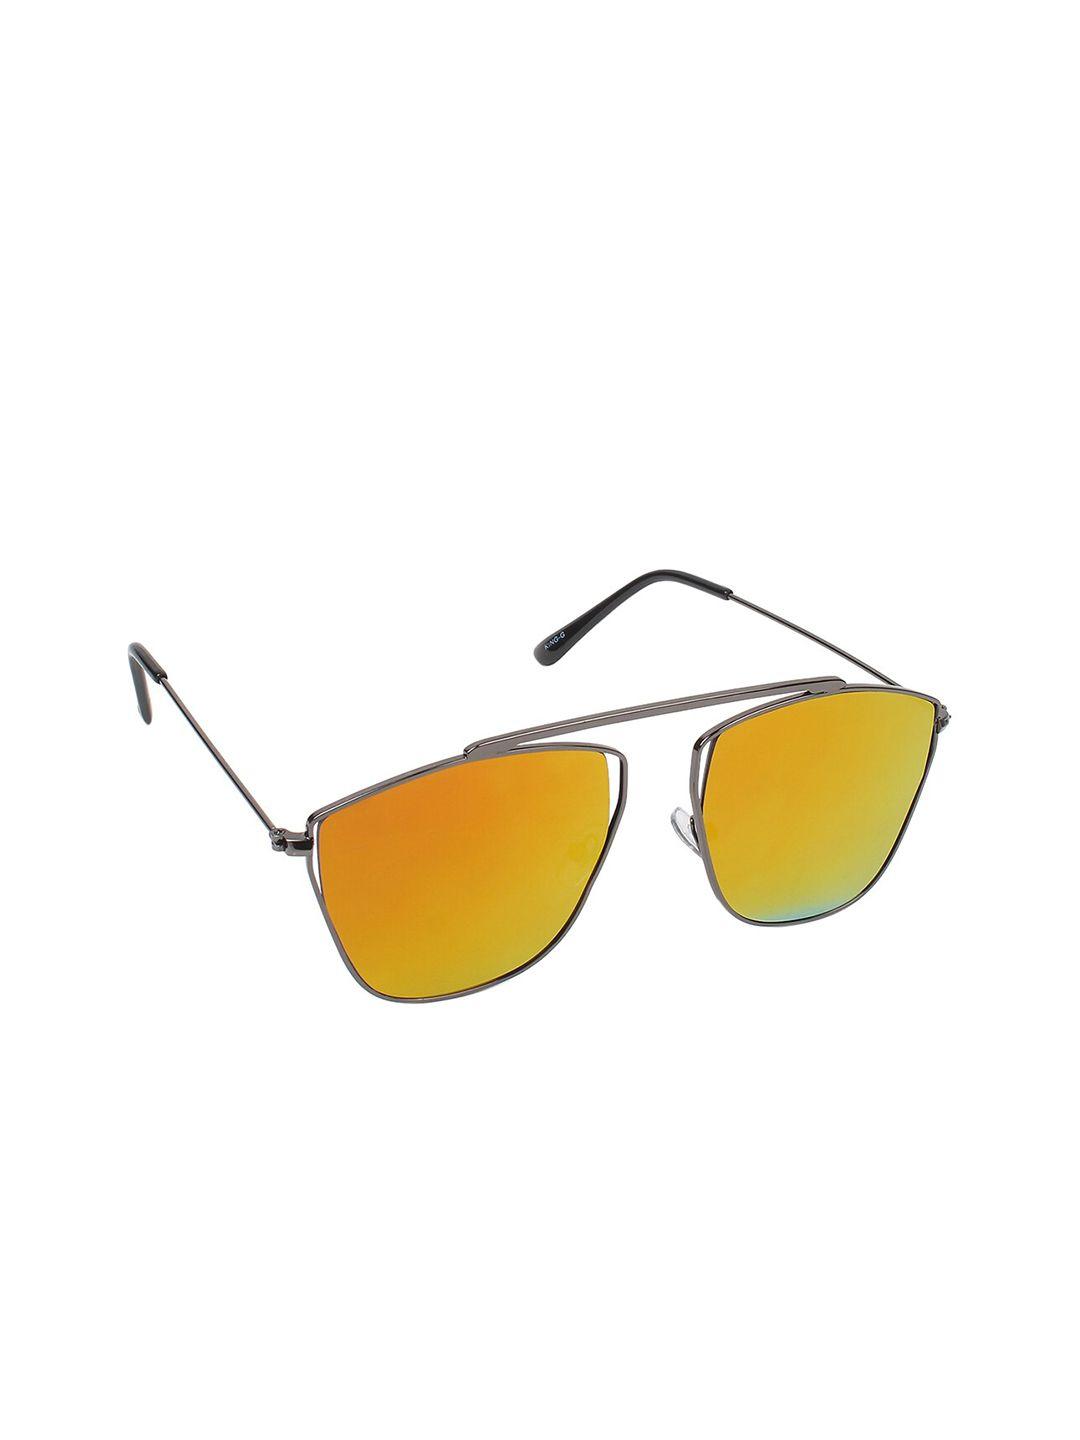 swiss design unisex gold lens & black square sunglasses - sdsg21-1102409